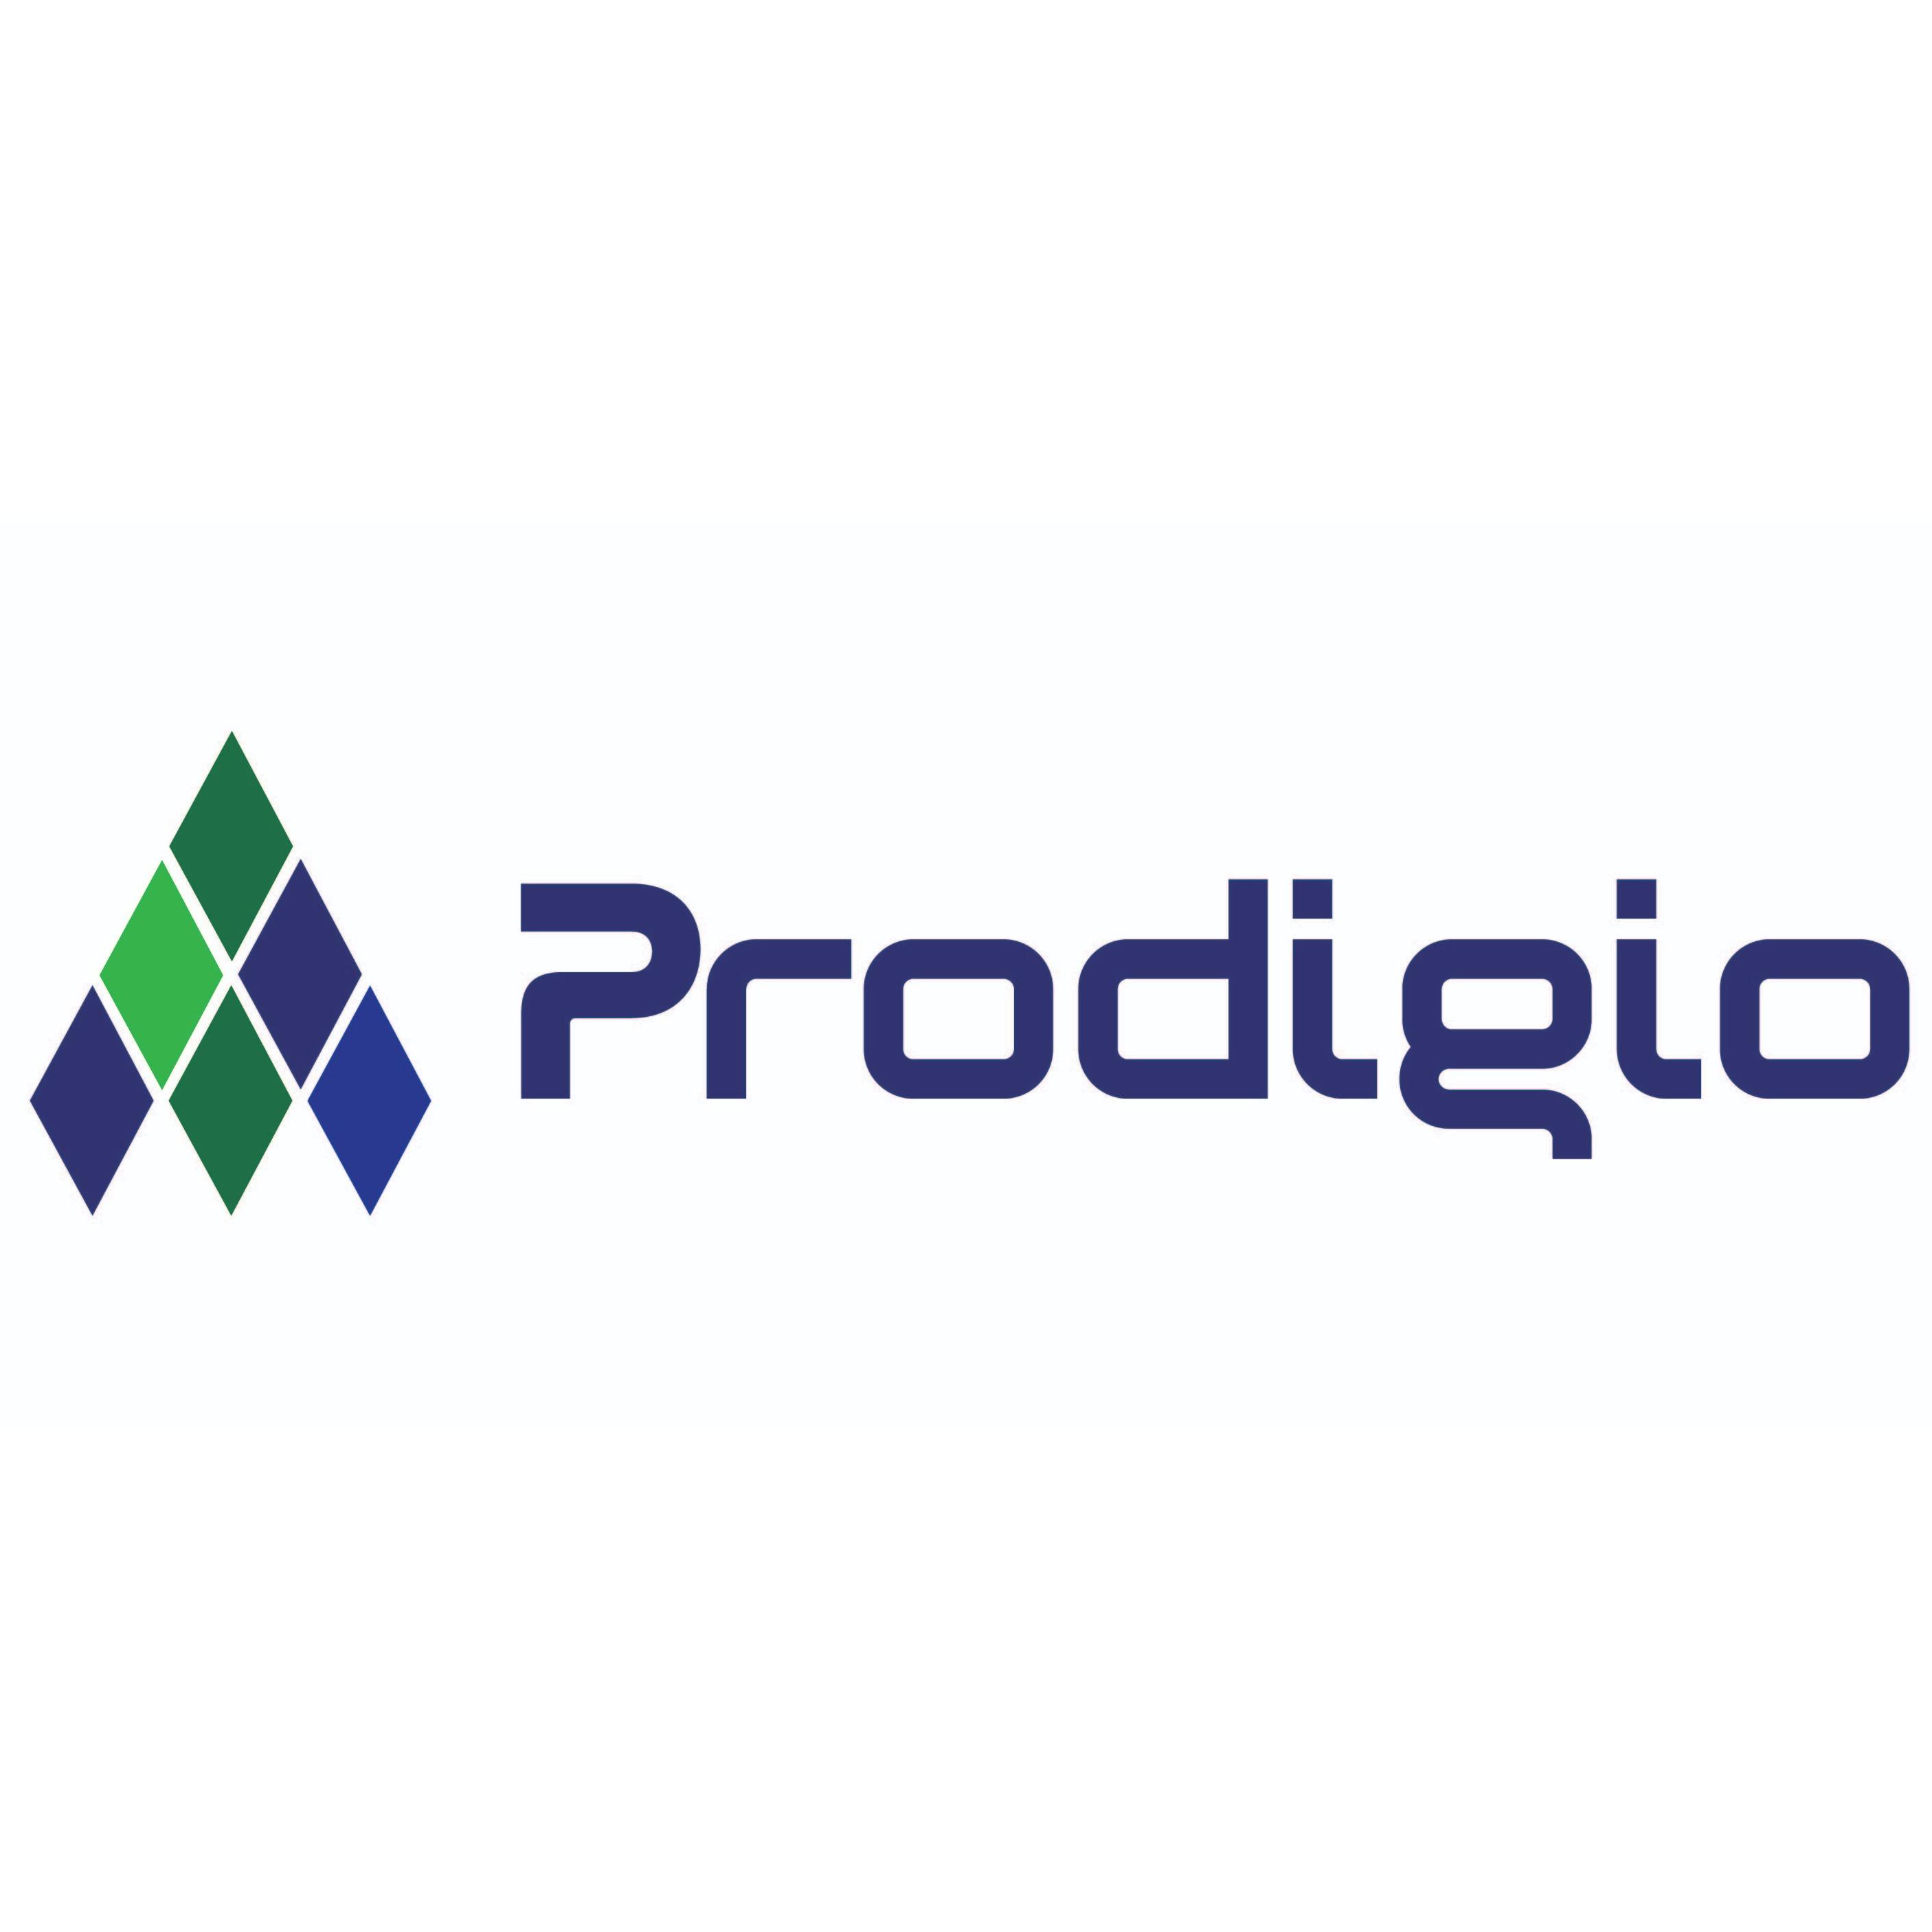 Prodigio Digital Marketing Logo